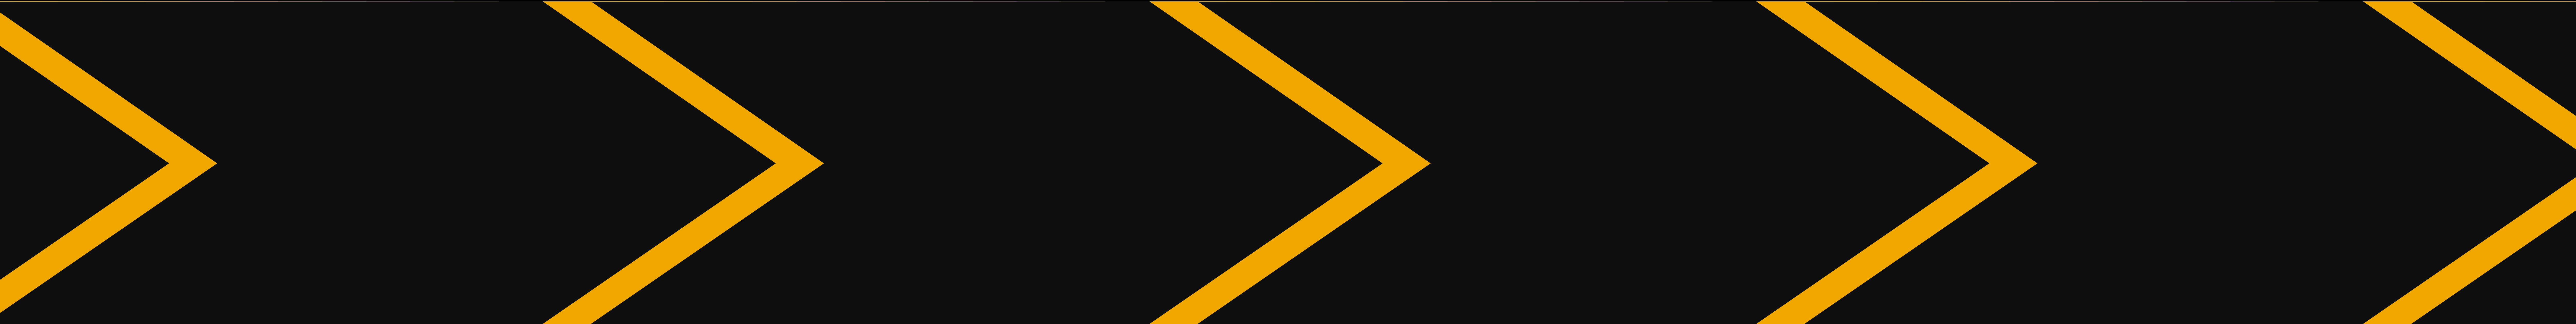 Merel Lux's profile banner